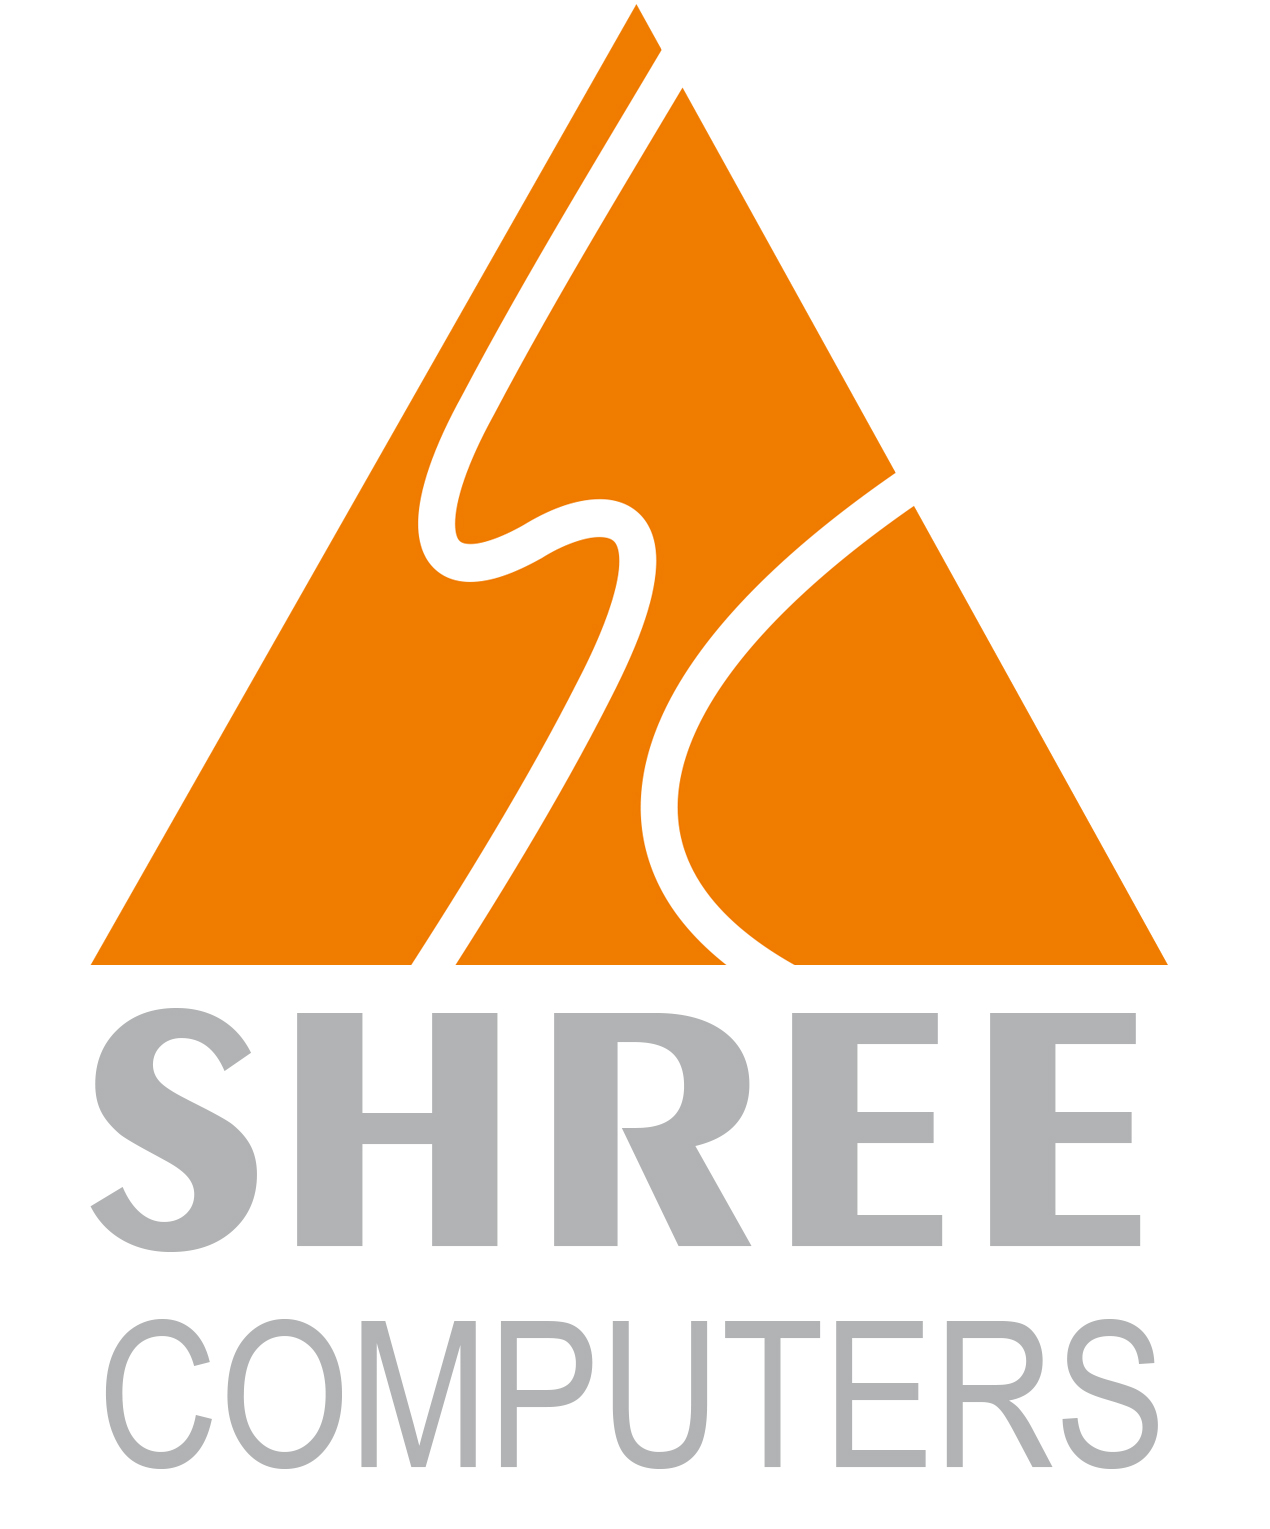 Shree Computers